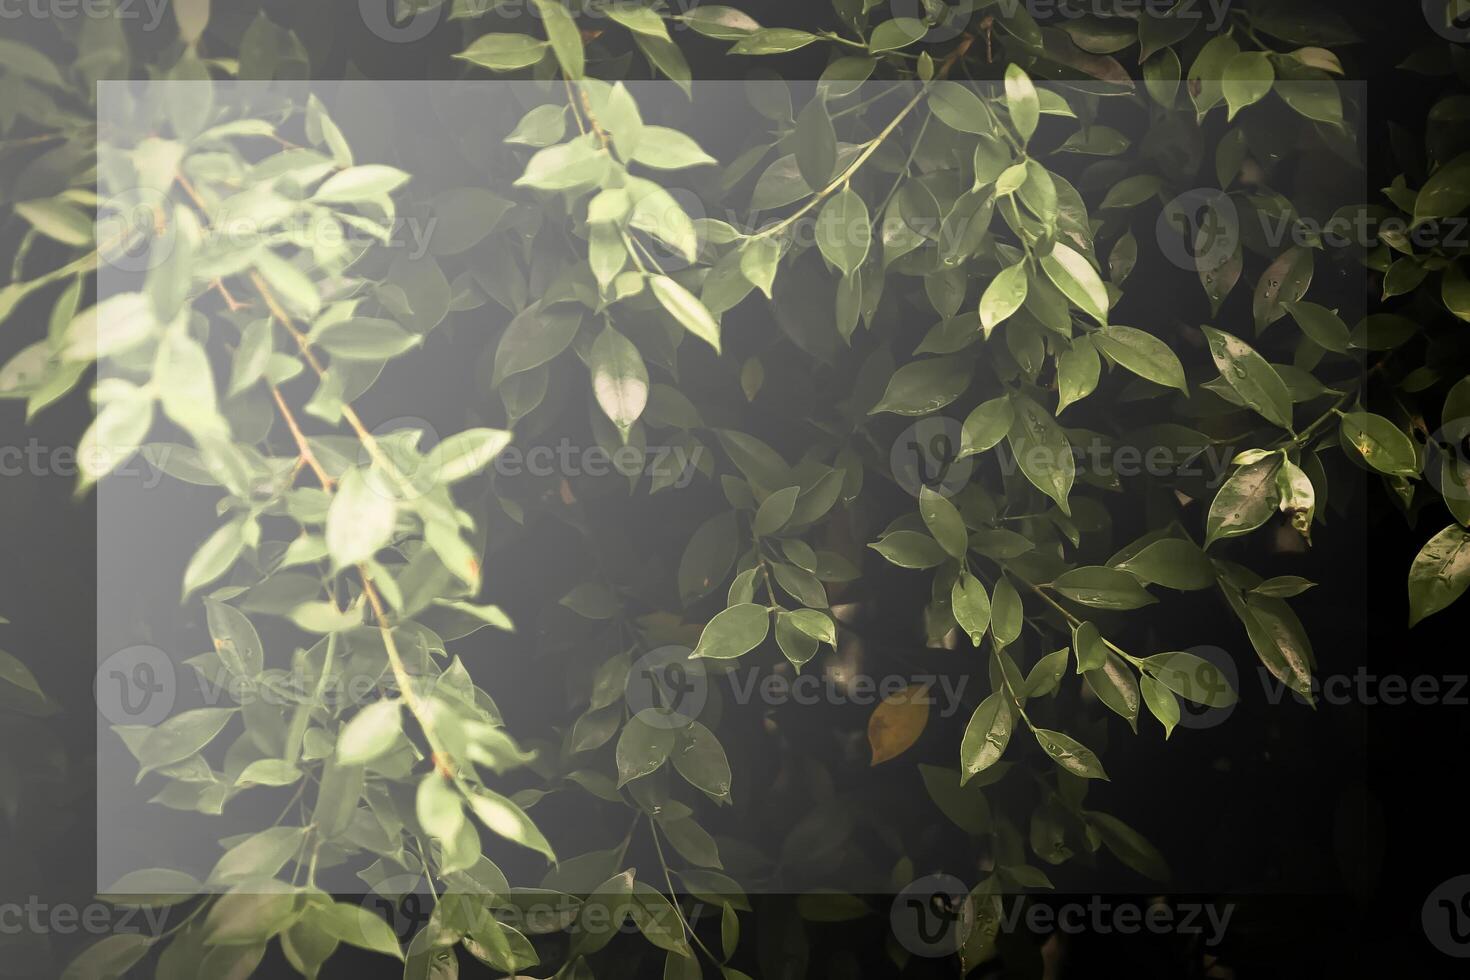 donker groen blad achtergrond, donker toon, klein bladeren, tropisch bladeren, donker groen blad behang, blad achtergrond met wit foto kader.